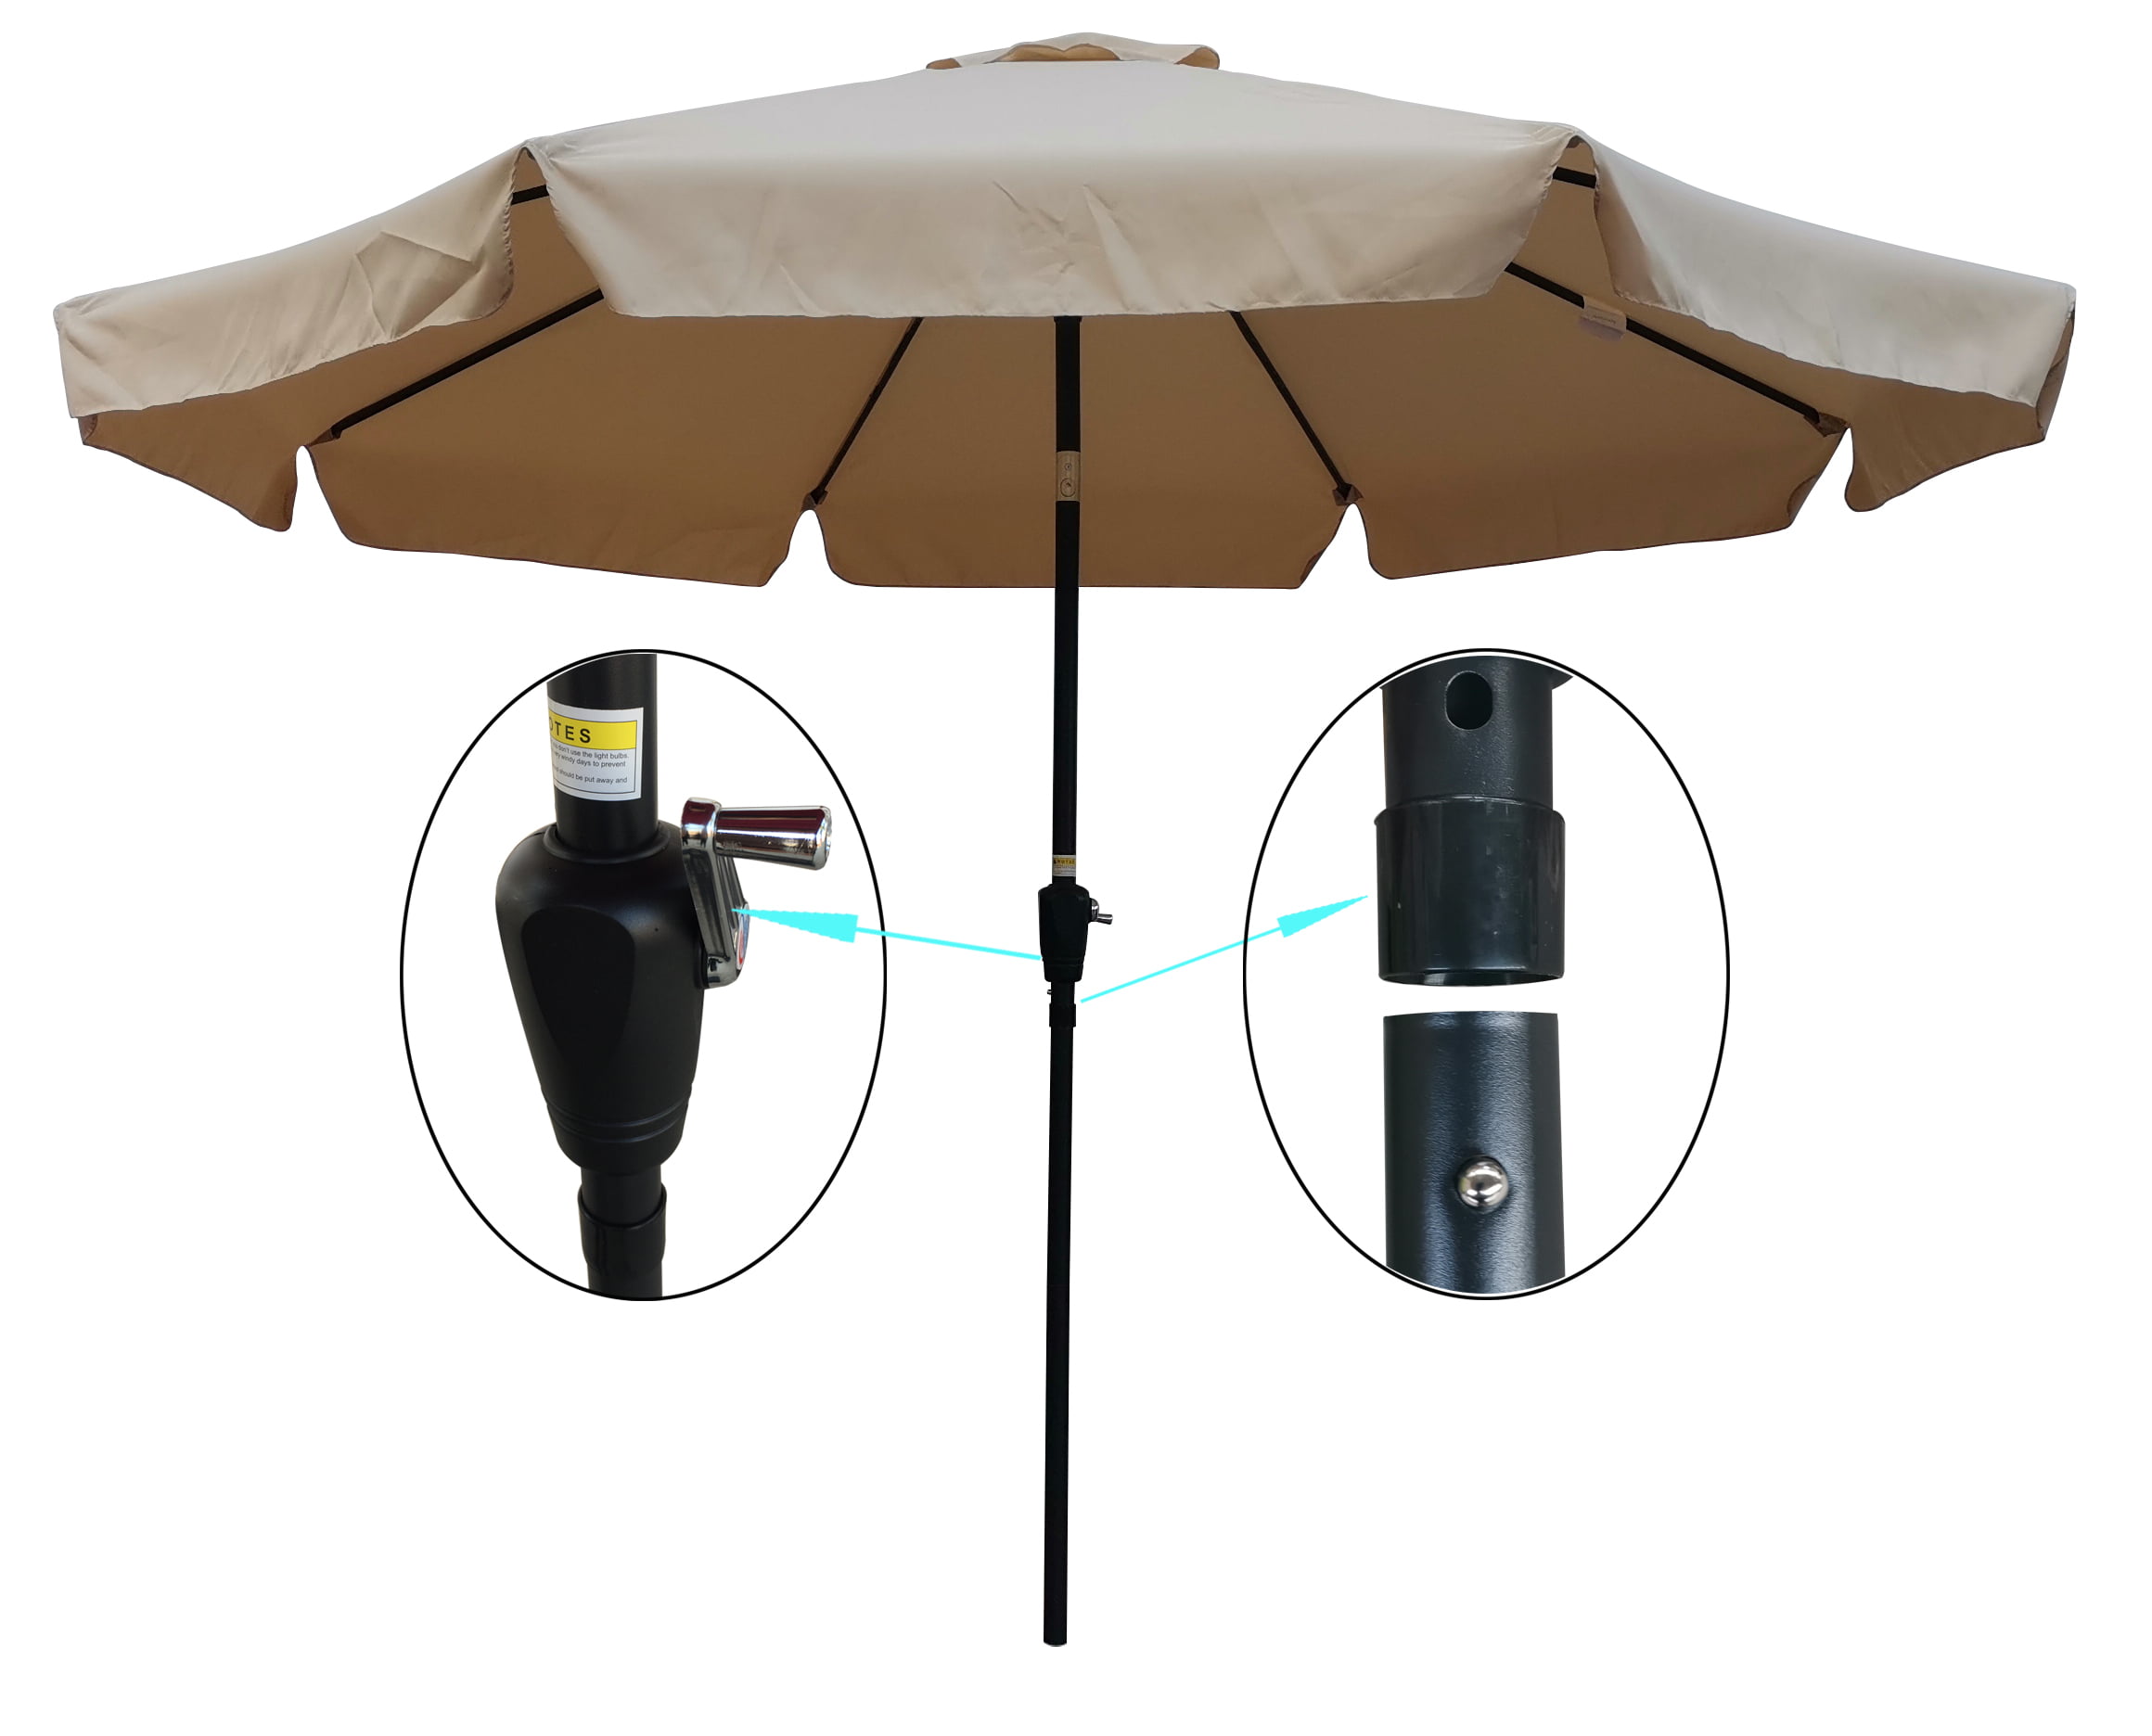 Details about   10ft Patio Garden Table Umbrellas Outdoor Market Sunbrella With 10FT Beige Lawn 